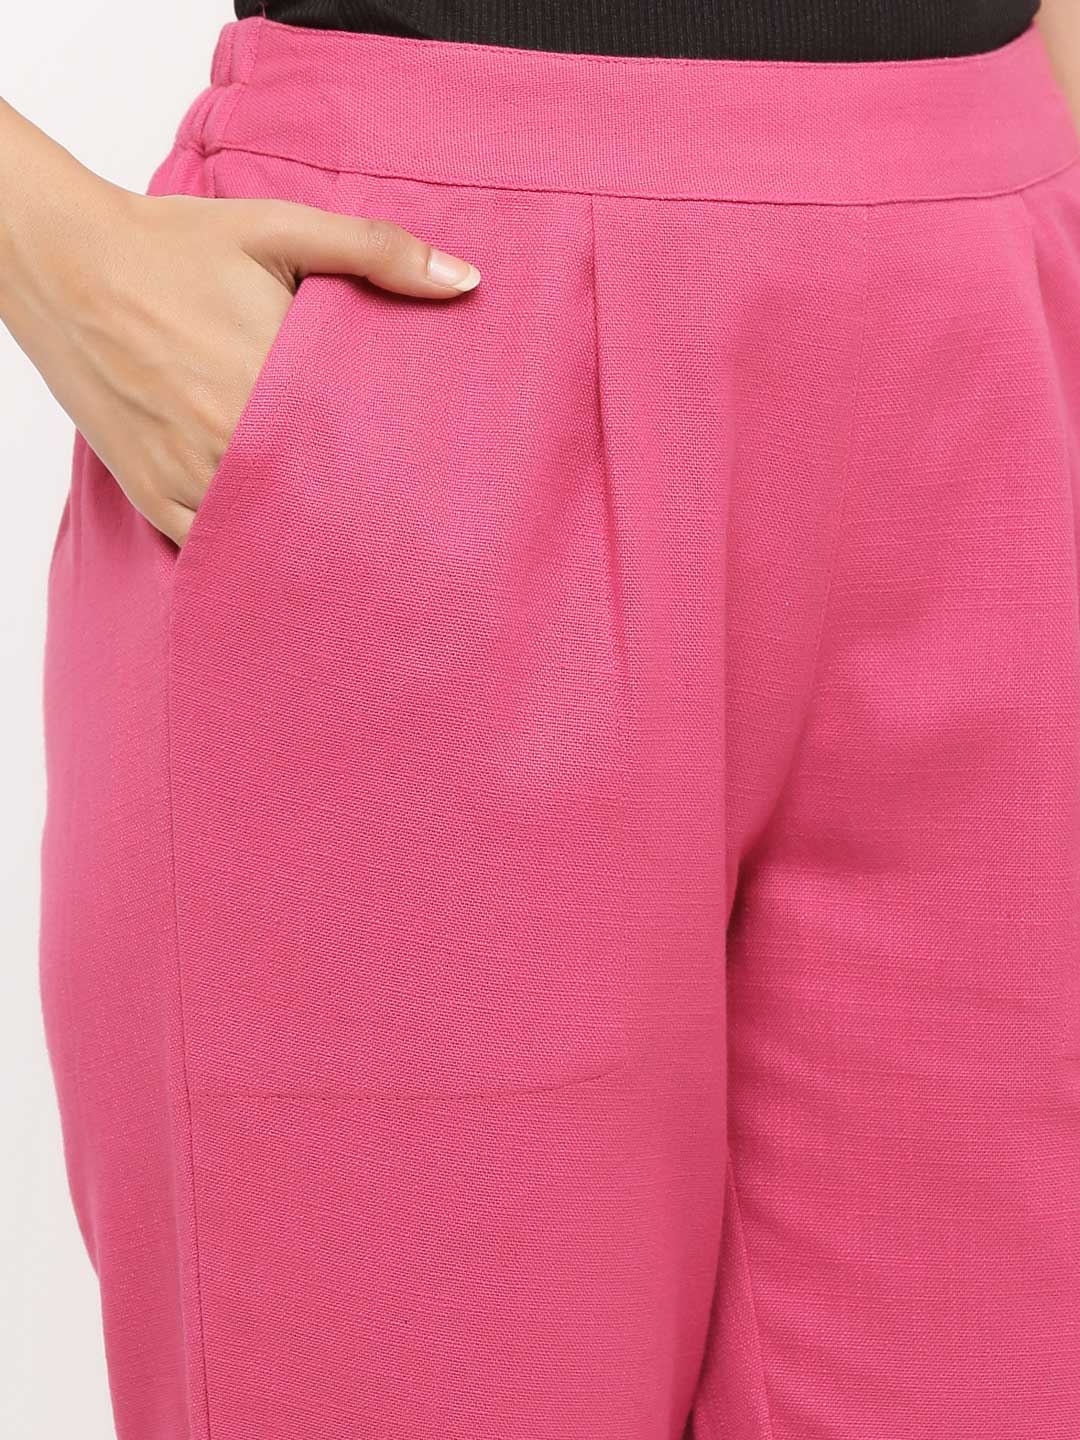  Buy Smart Casual Pants